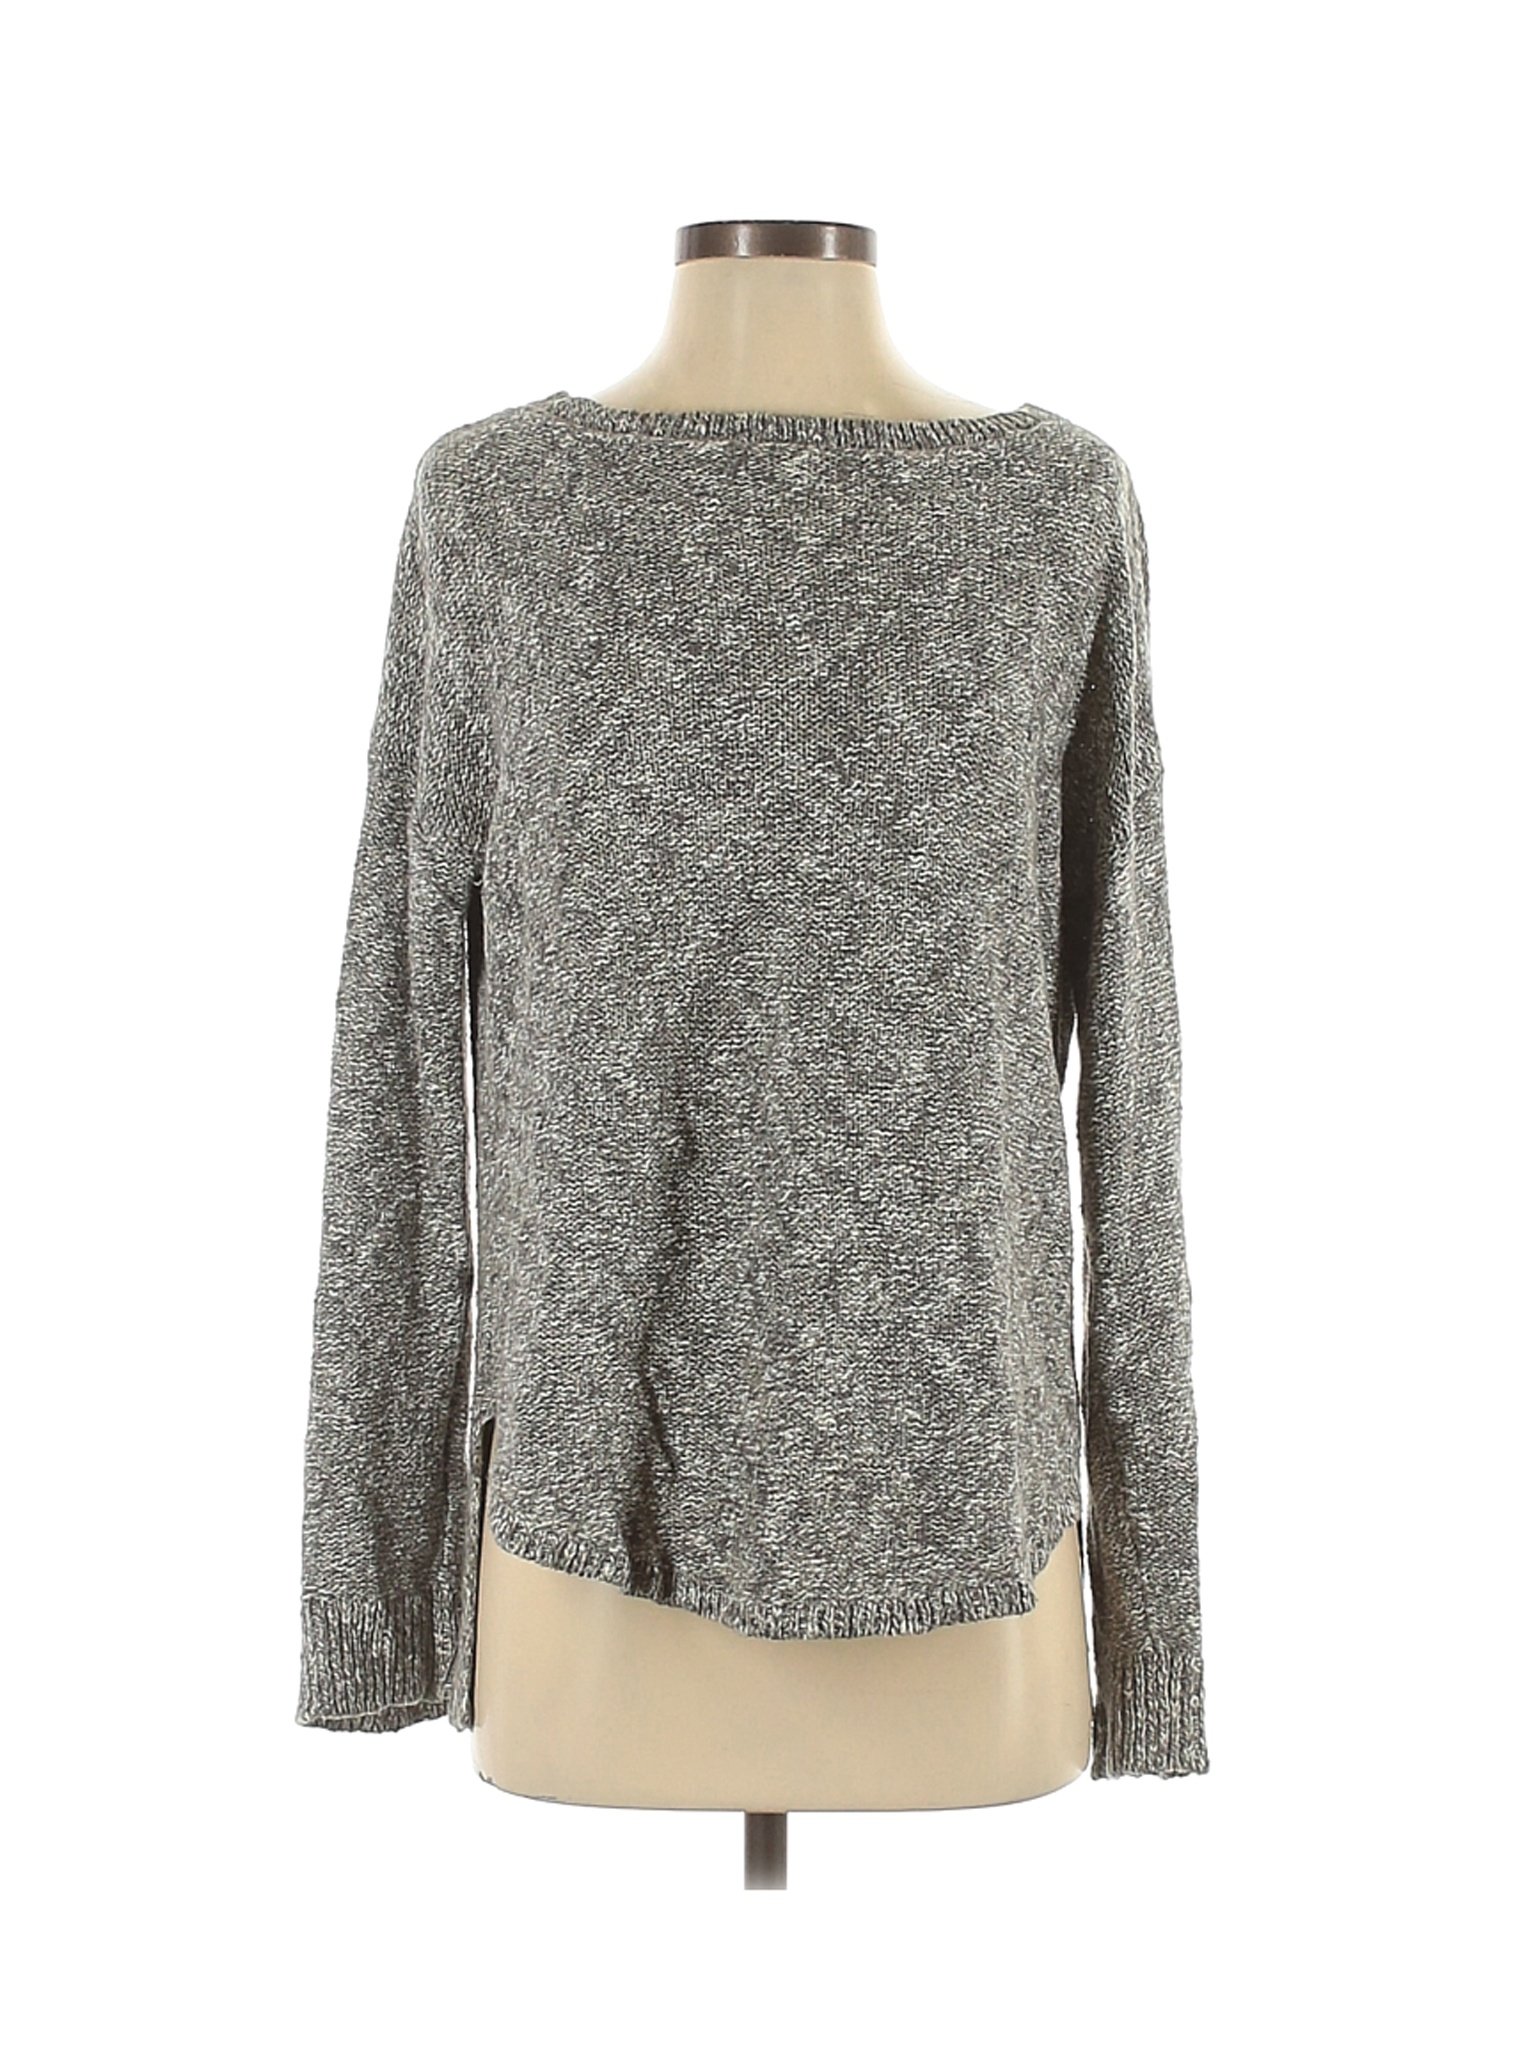 Banana Republic Women Gray Pullover Sweater S | eBay